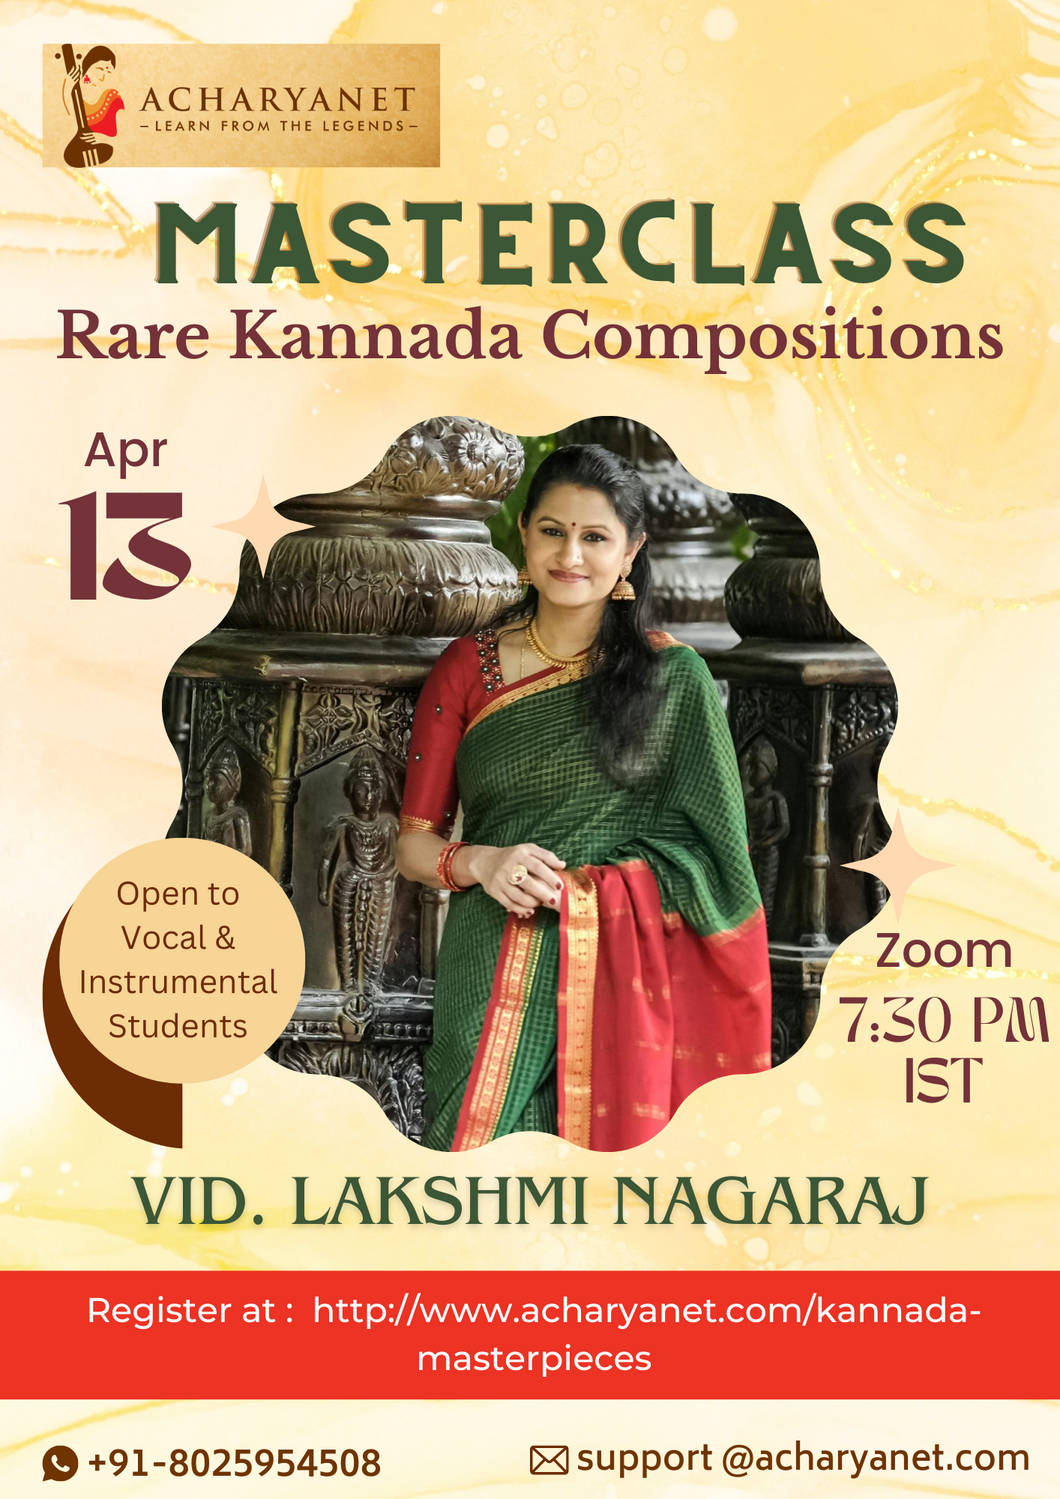 Masterclass on Rare Kannada Compositions by Vid. Lakshmi Nagaraj